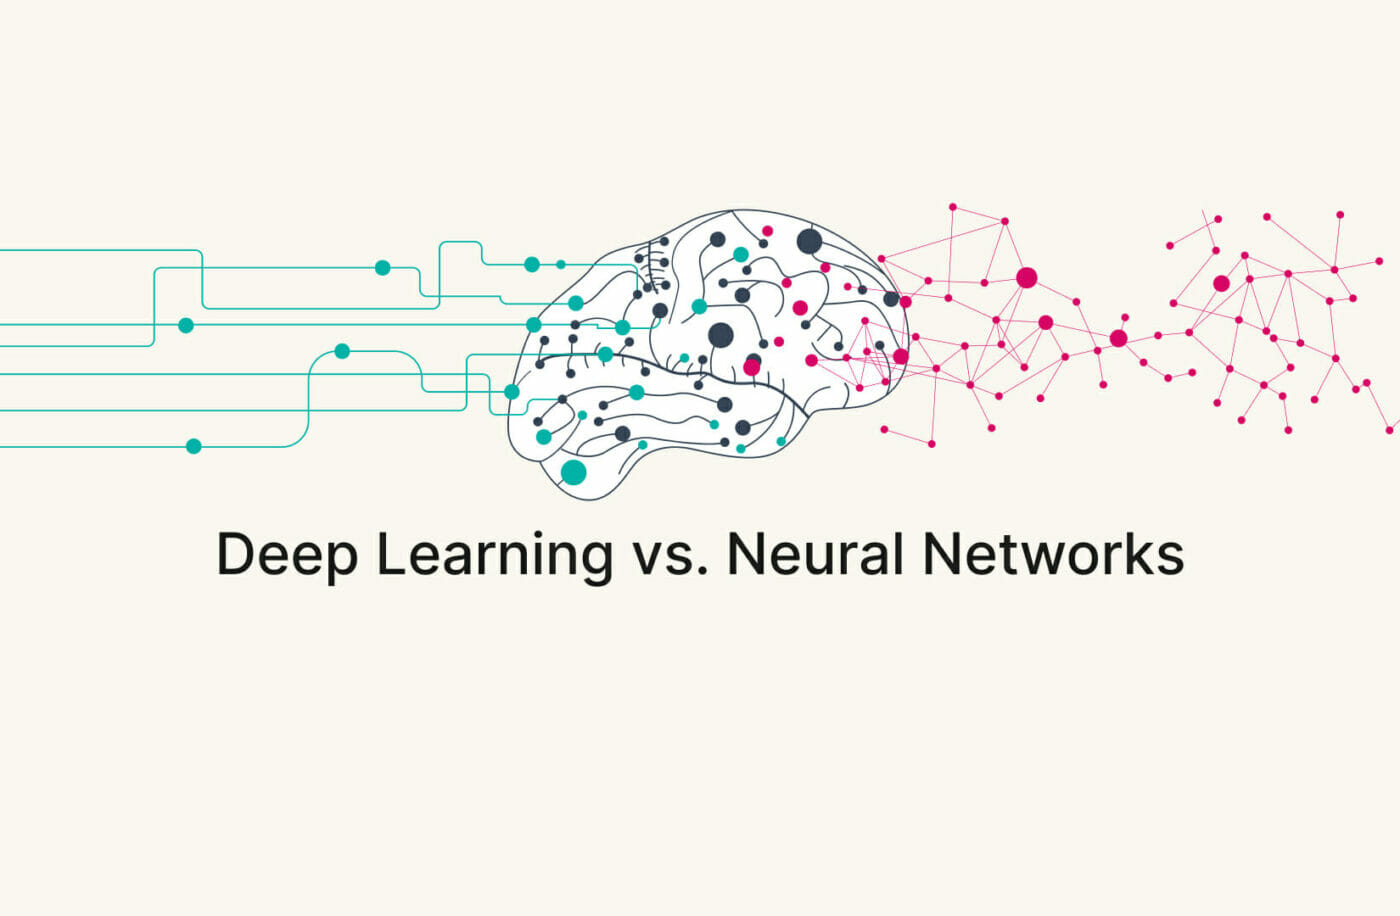 Deep learning e reti neurali a confronto